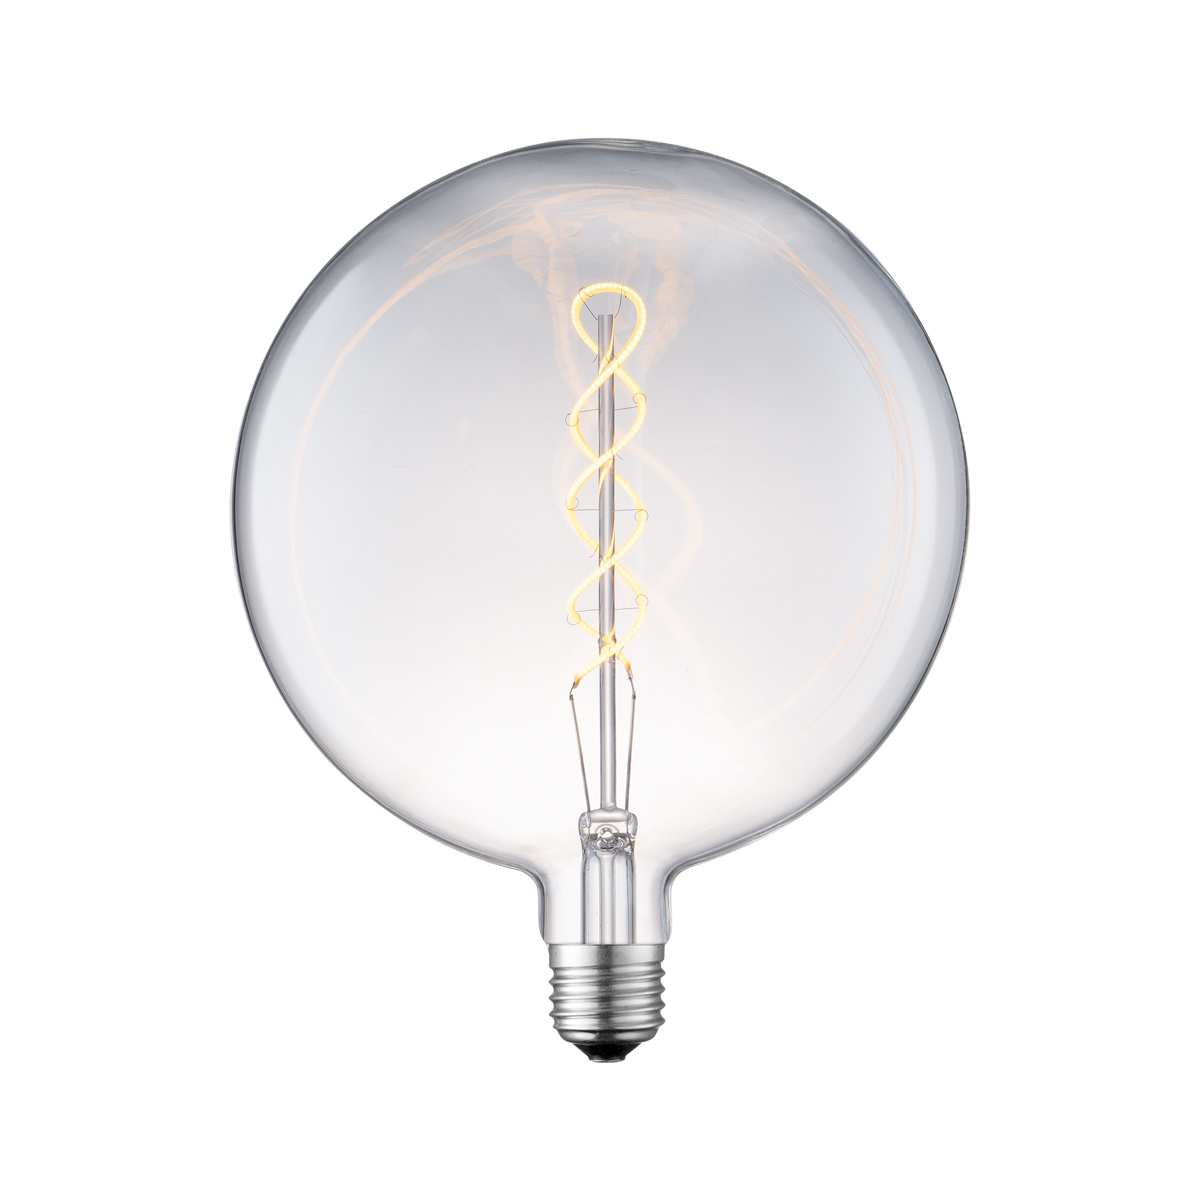 Tangla lighting - TLB-8098-04CL - LED Light Bulb Double Spiral filament - G180 4W clear - medium - dimmabel - E27